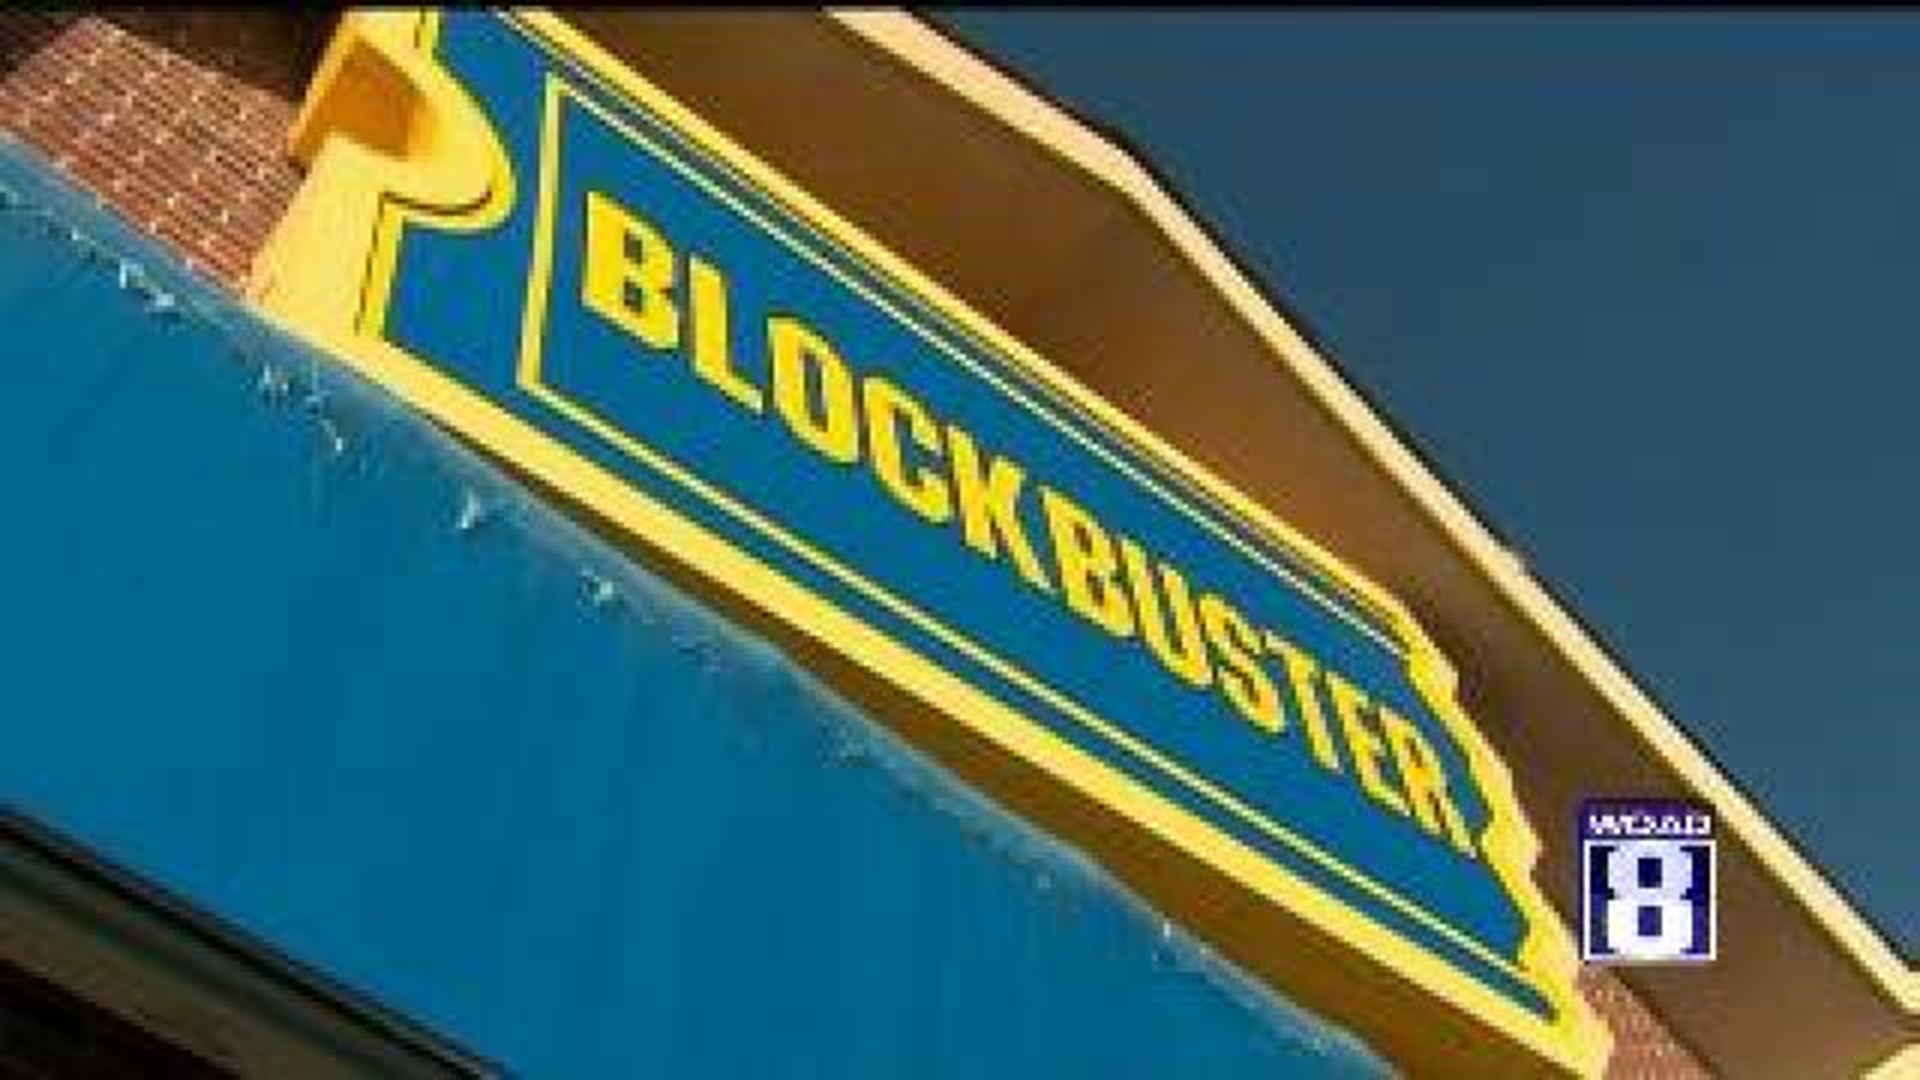 Blockbuster closing more stores